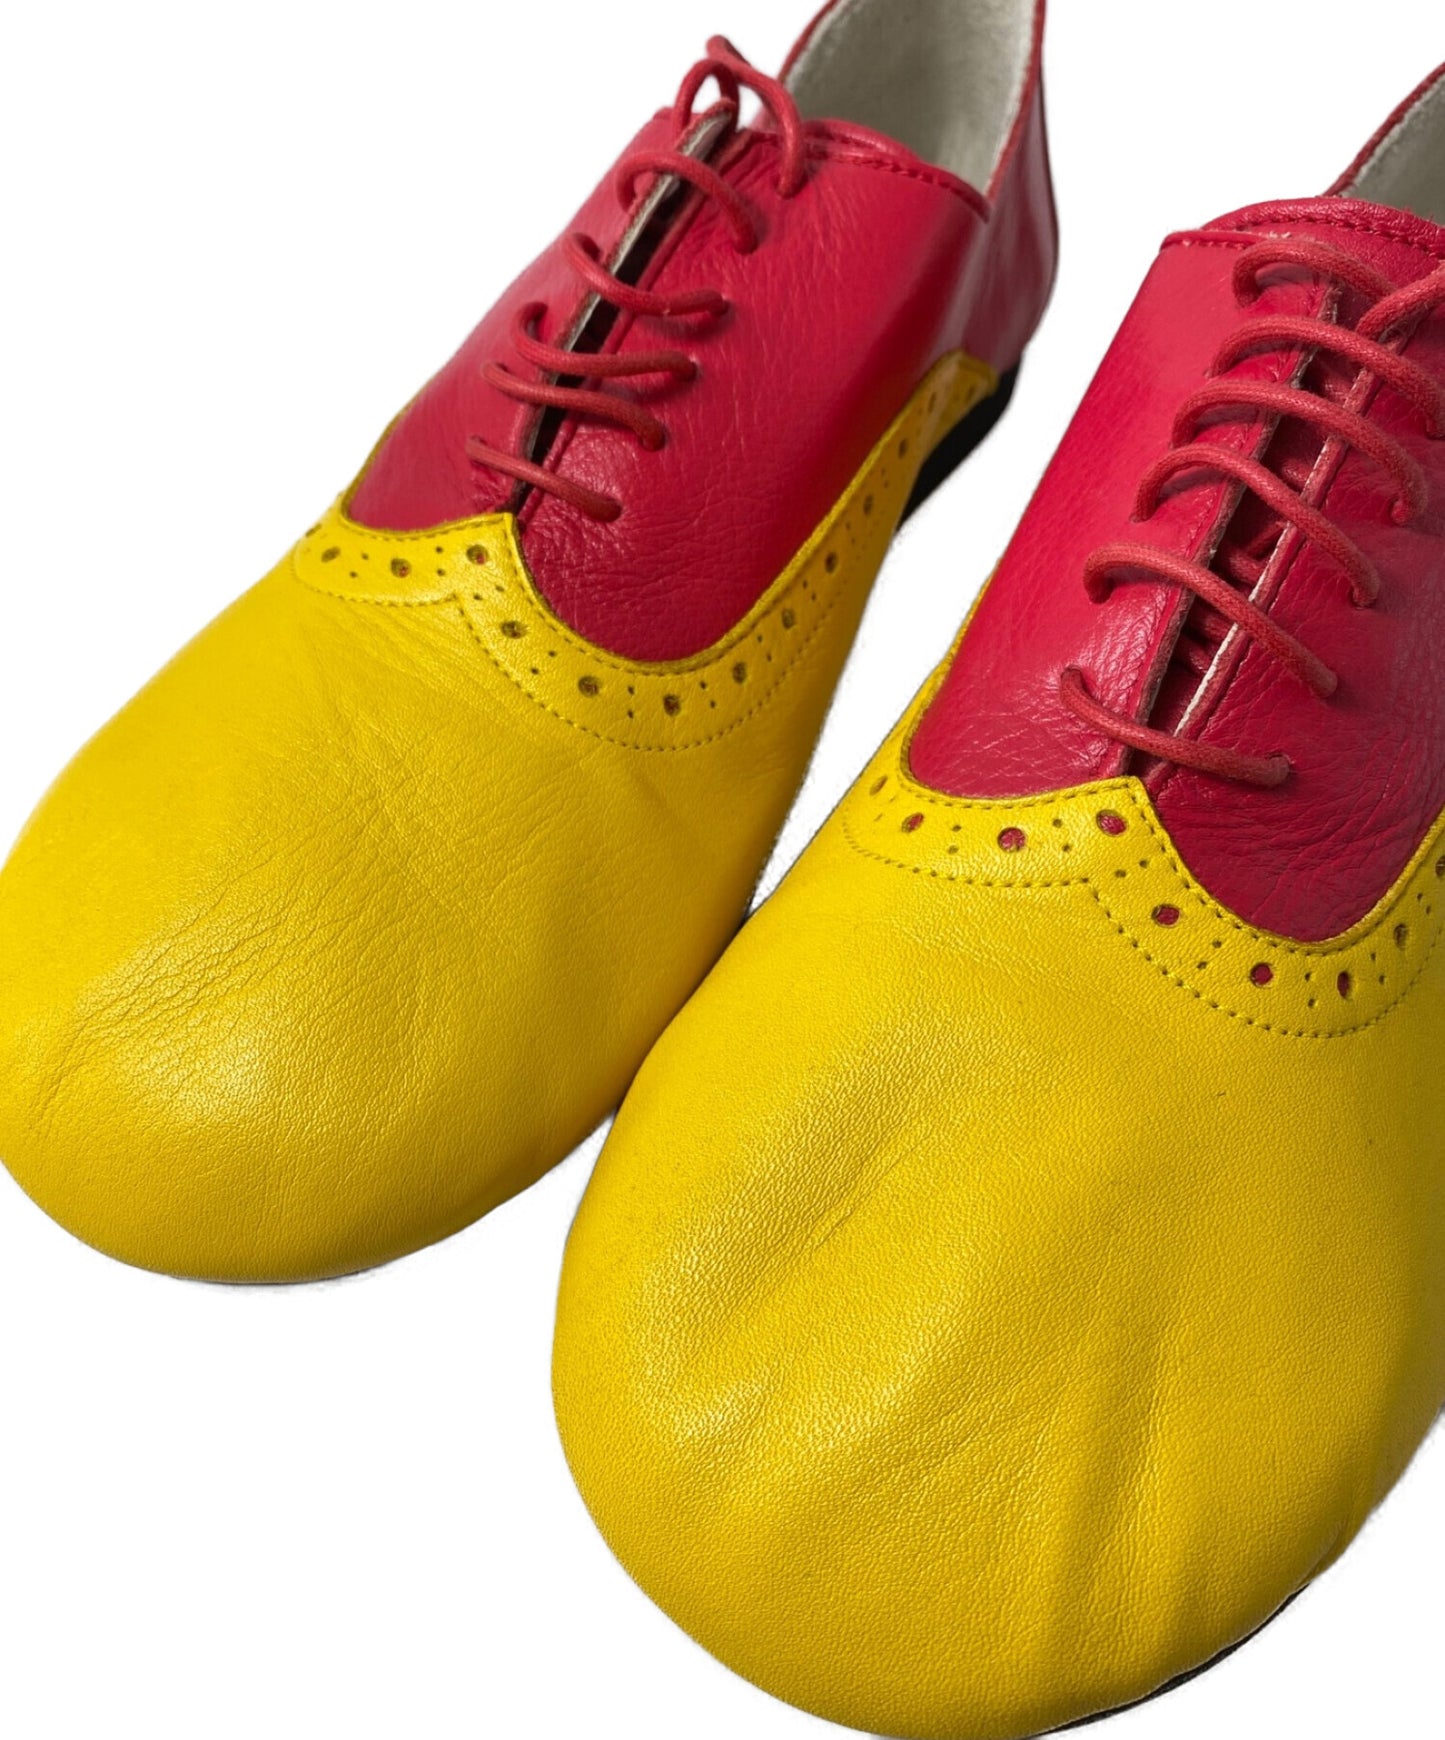 [Pre-owned] COMME des GARCONS HOMME PLUS 23SS Bicolor leather shoes